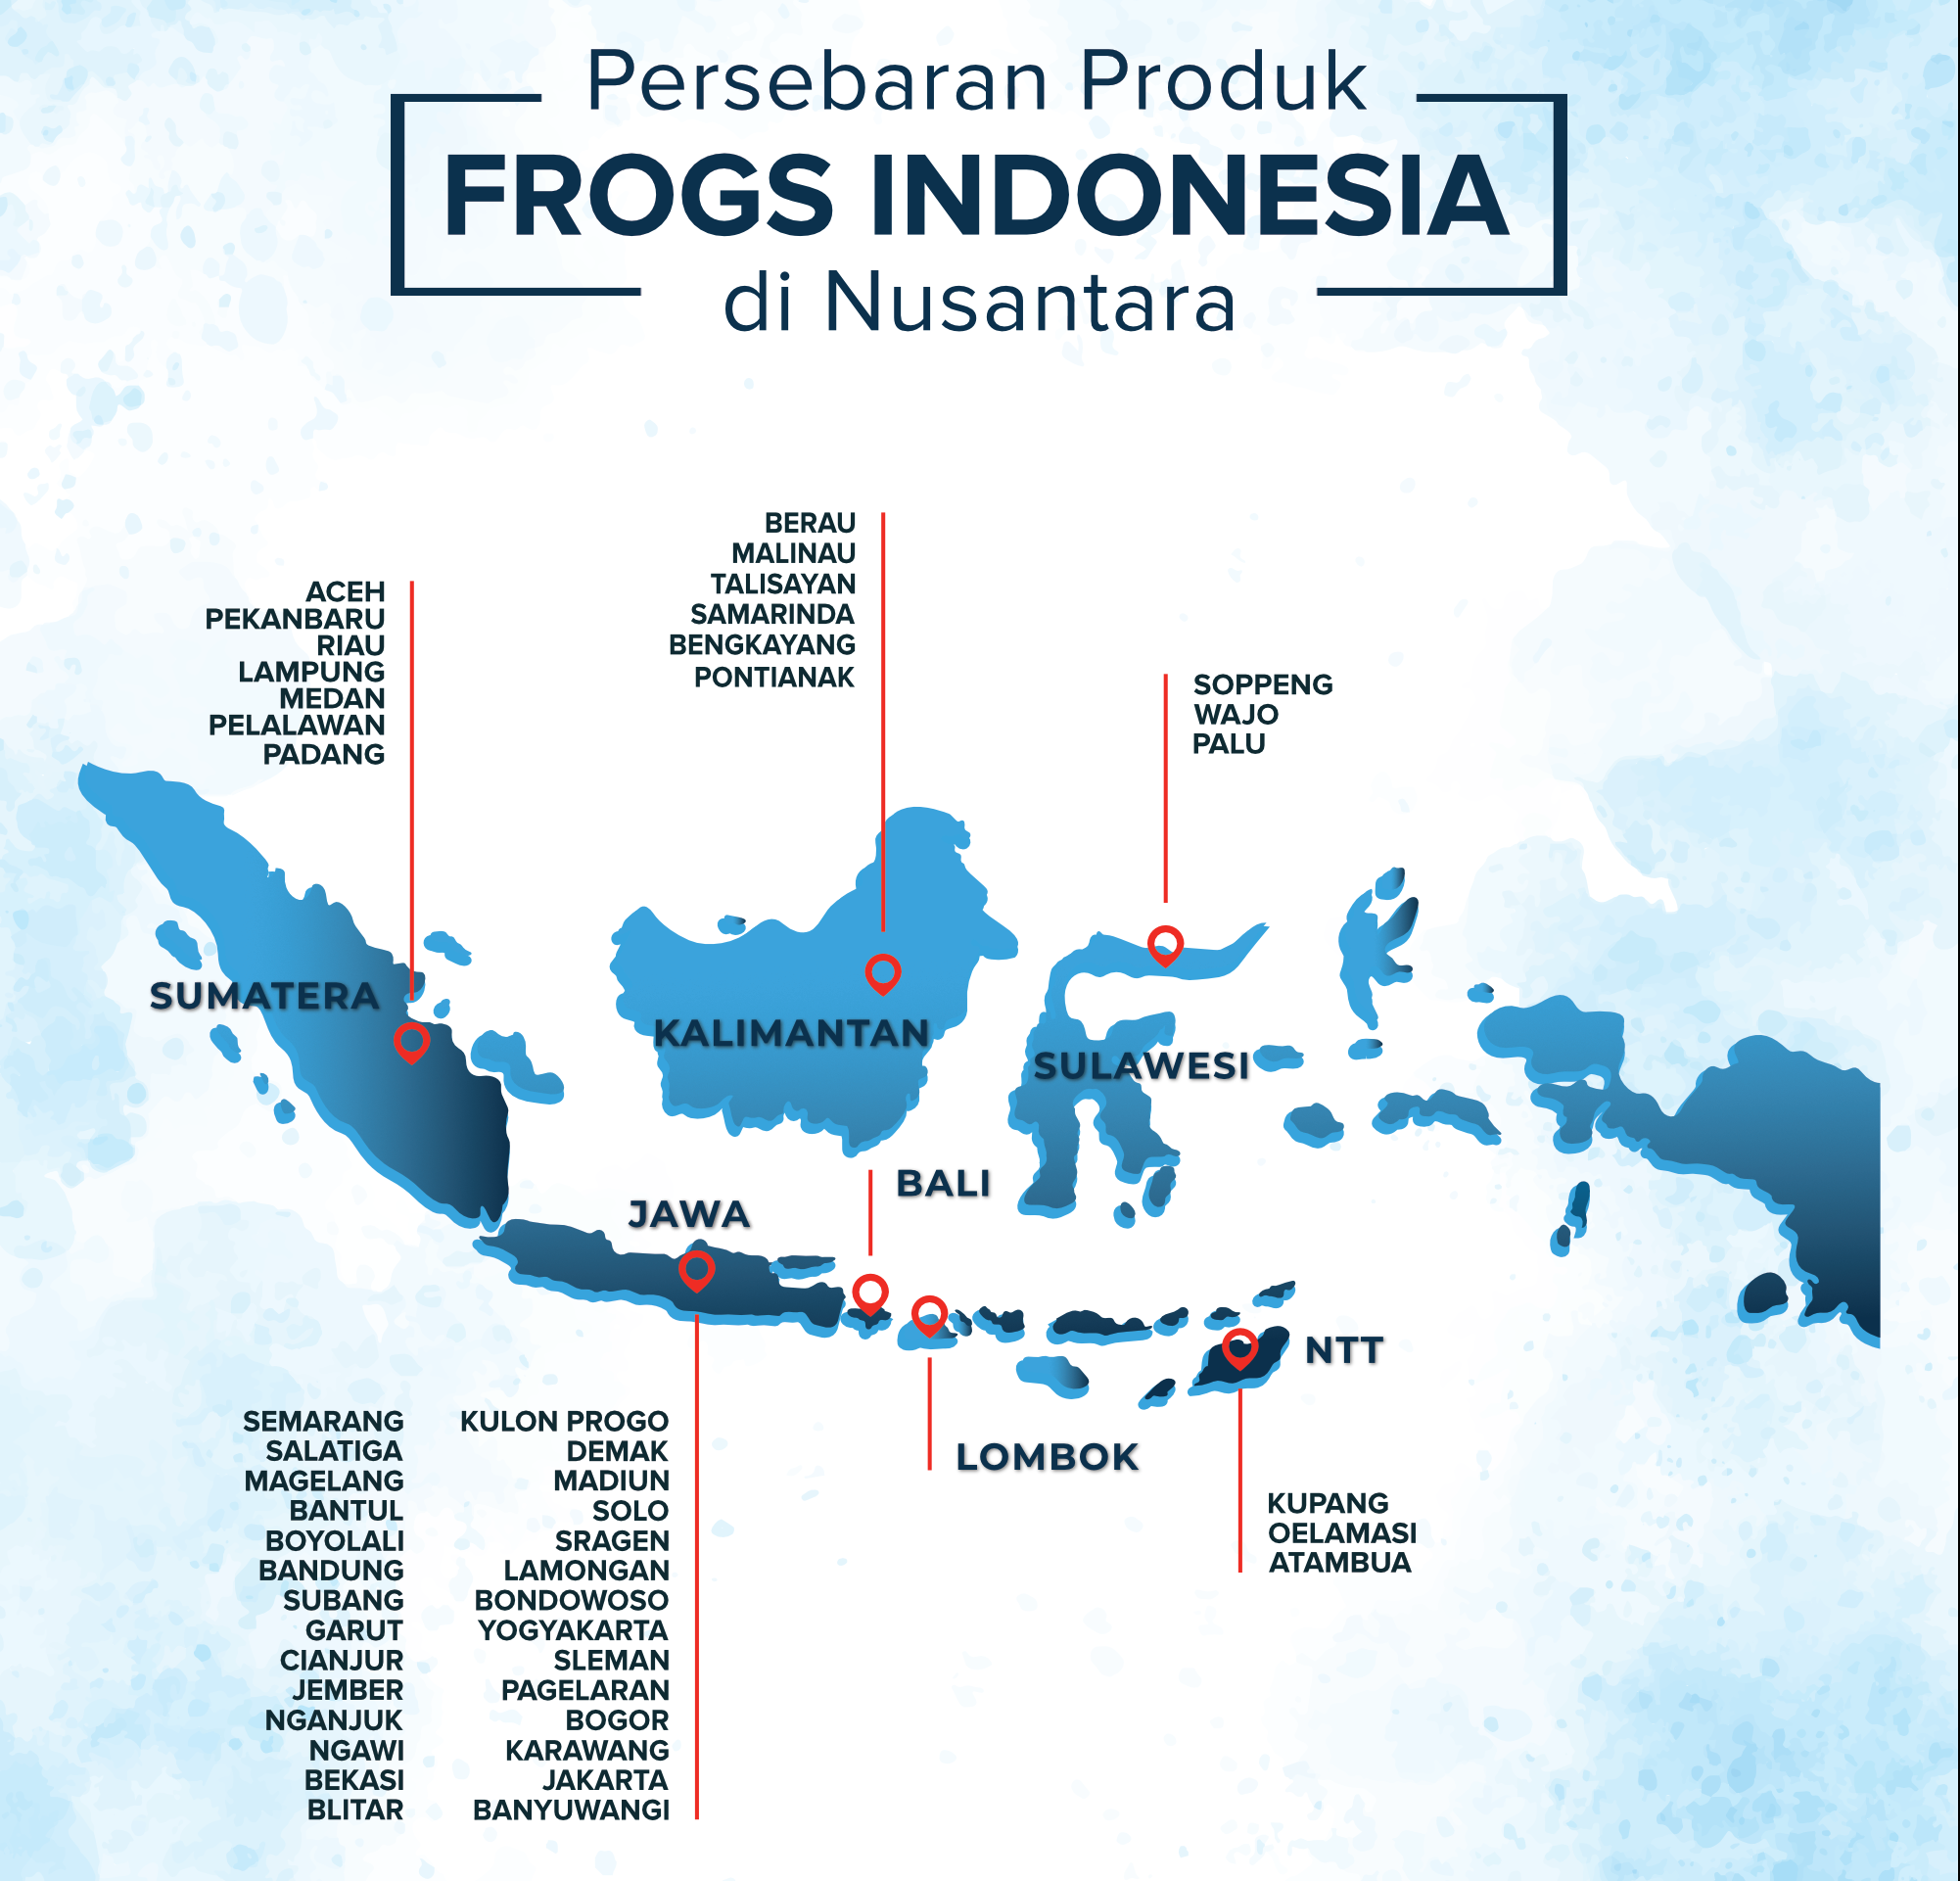 Persebaran Teknologi Drone oleh Frogs Indonesia di Tanah Air